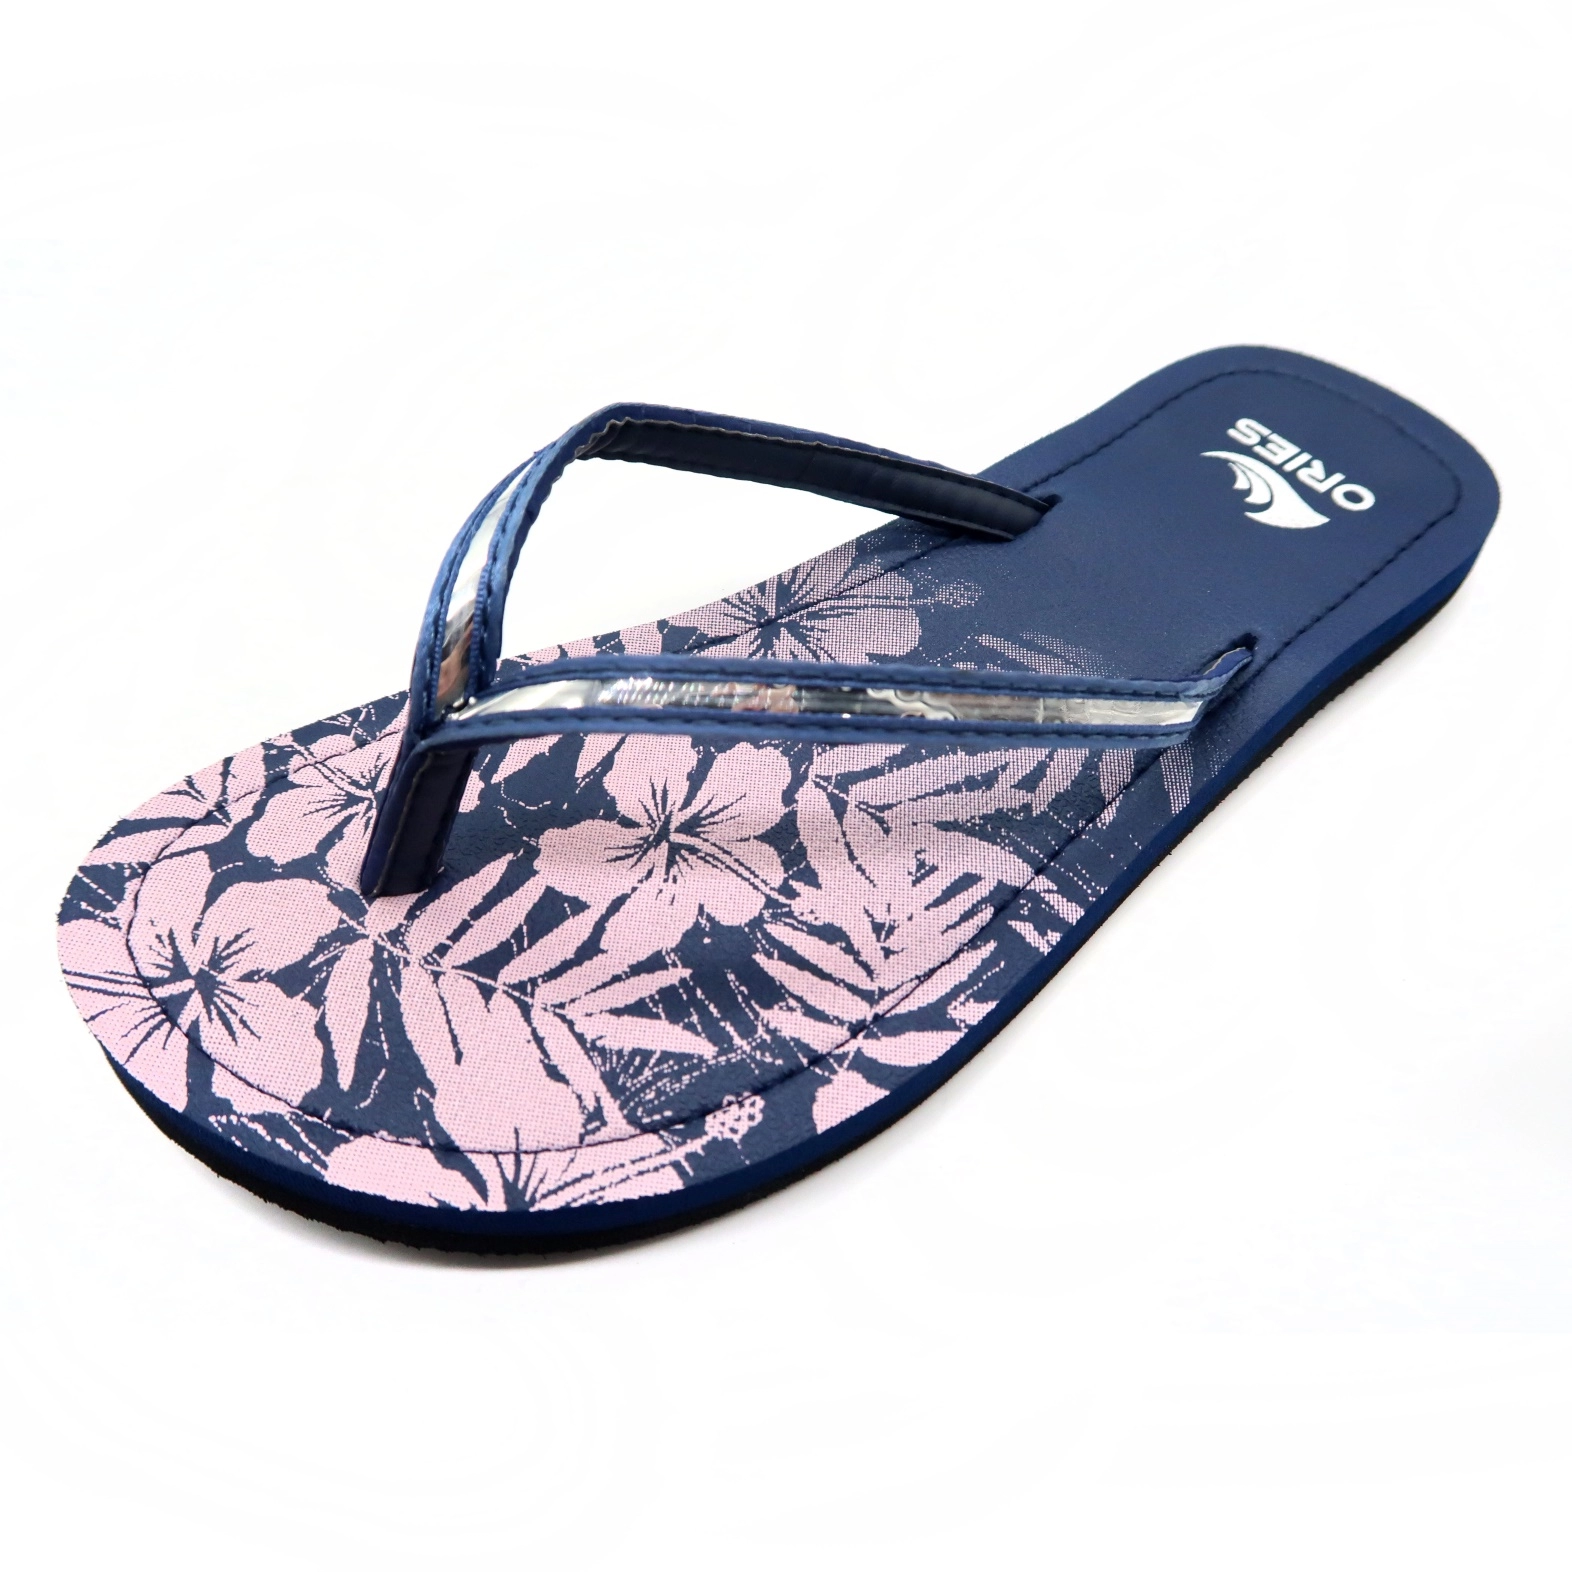 PU stylish flip flops for women outdoor sandals